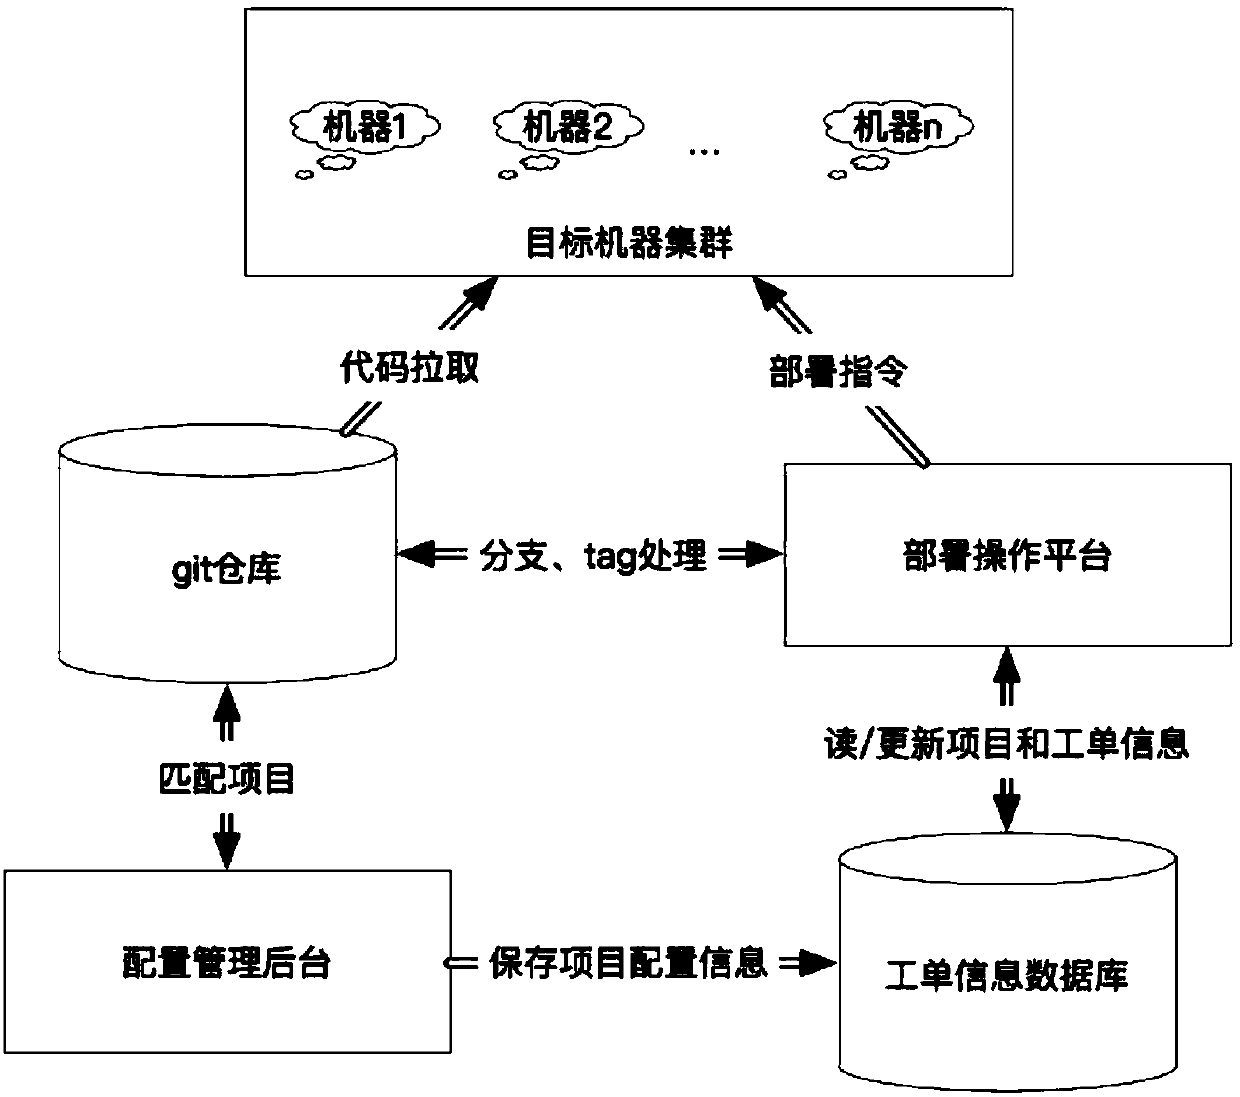 A git-based code distribution system